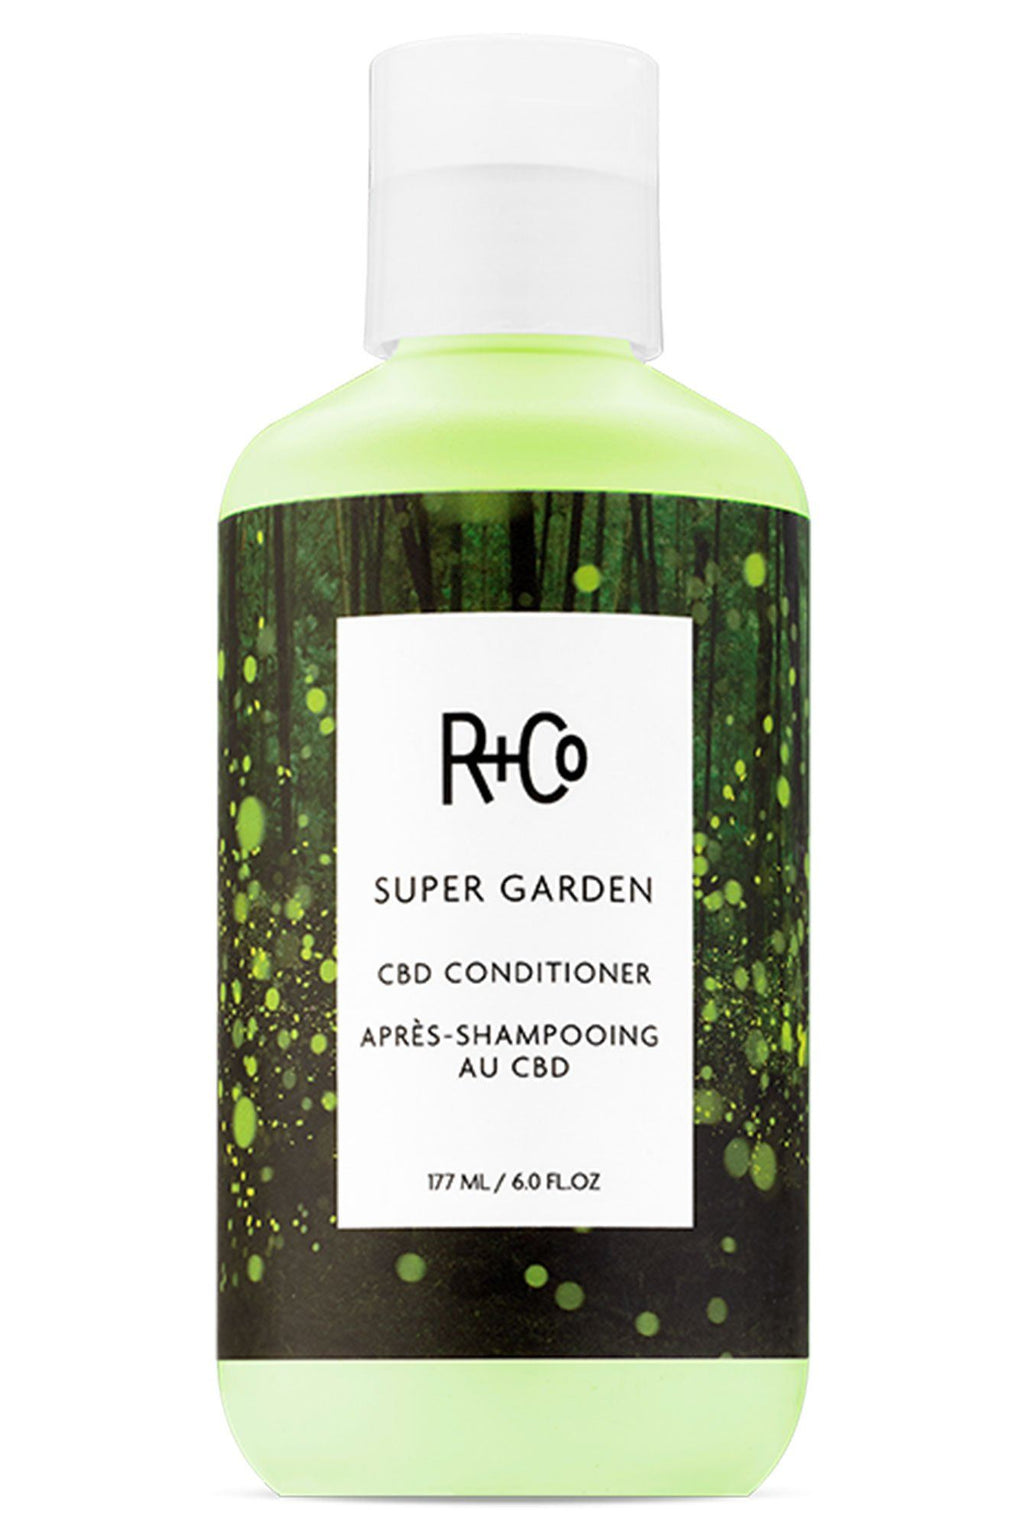 R+CO | Super Garden CBD Conditioner